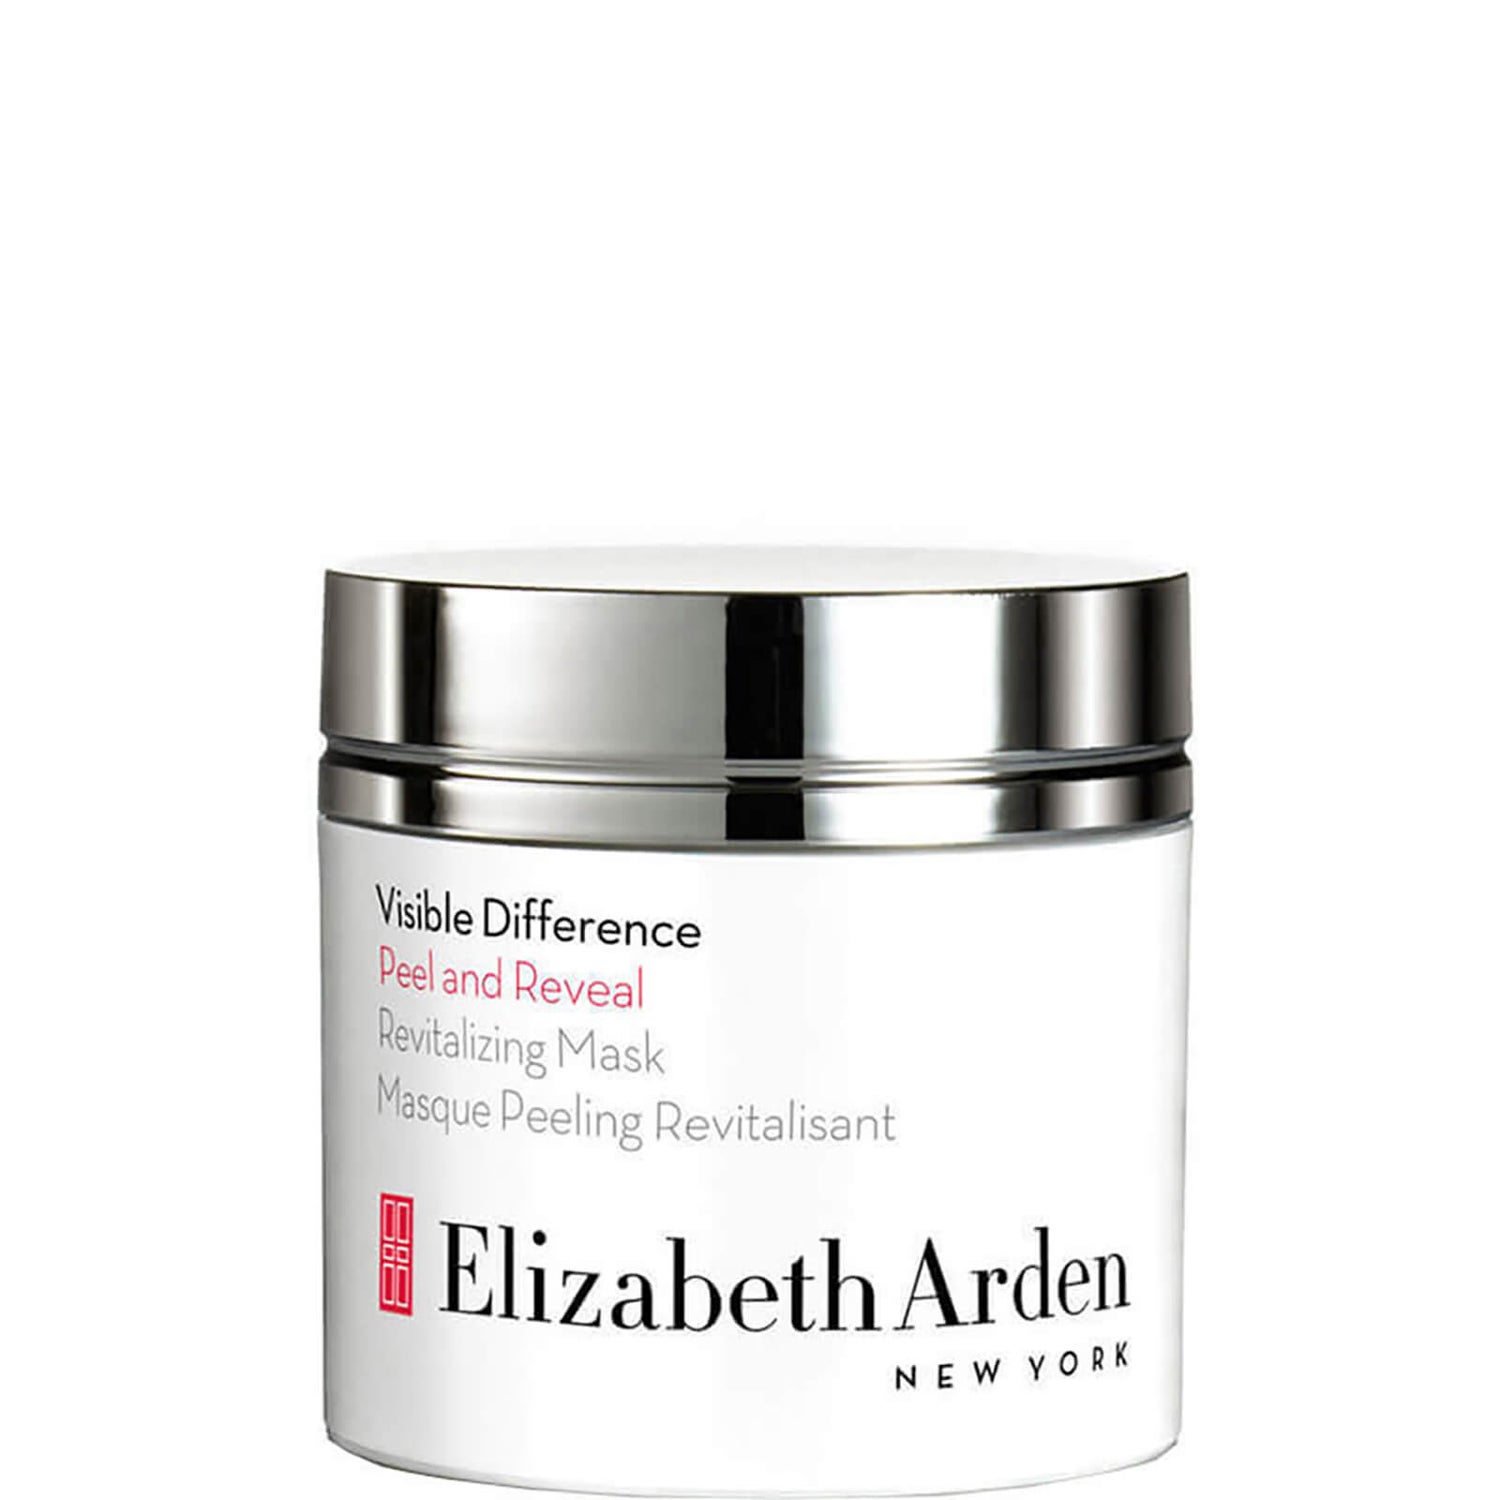 Elizabeth Arden Visible Difference Masque Peeling Revitalisant (50ml)